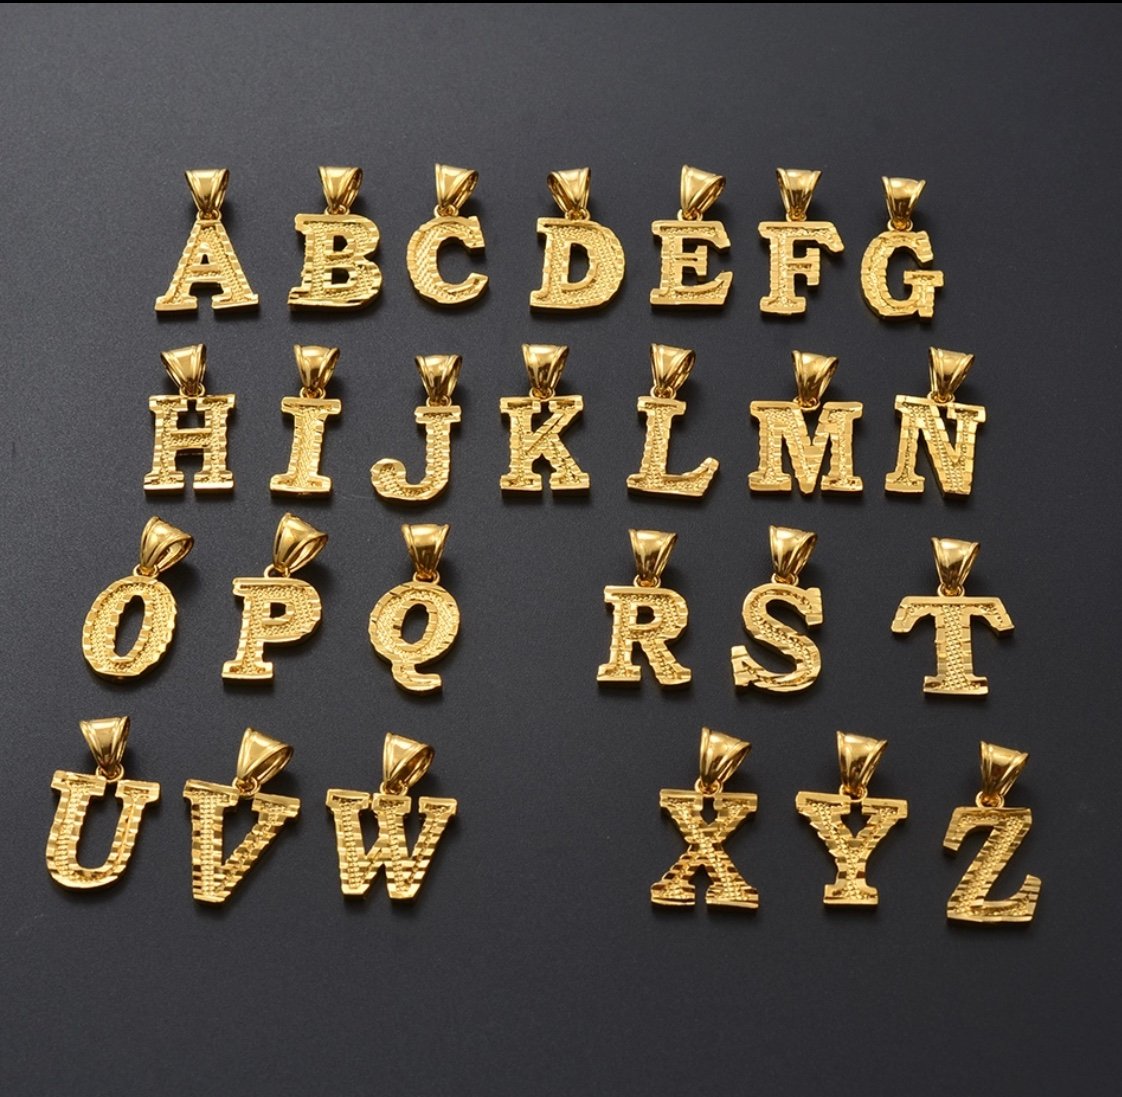 adobe letter chain